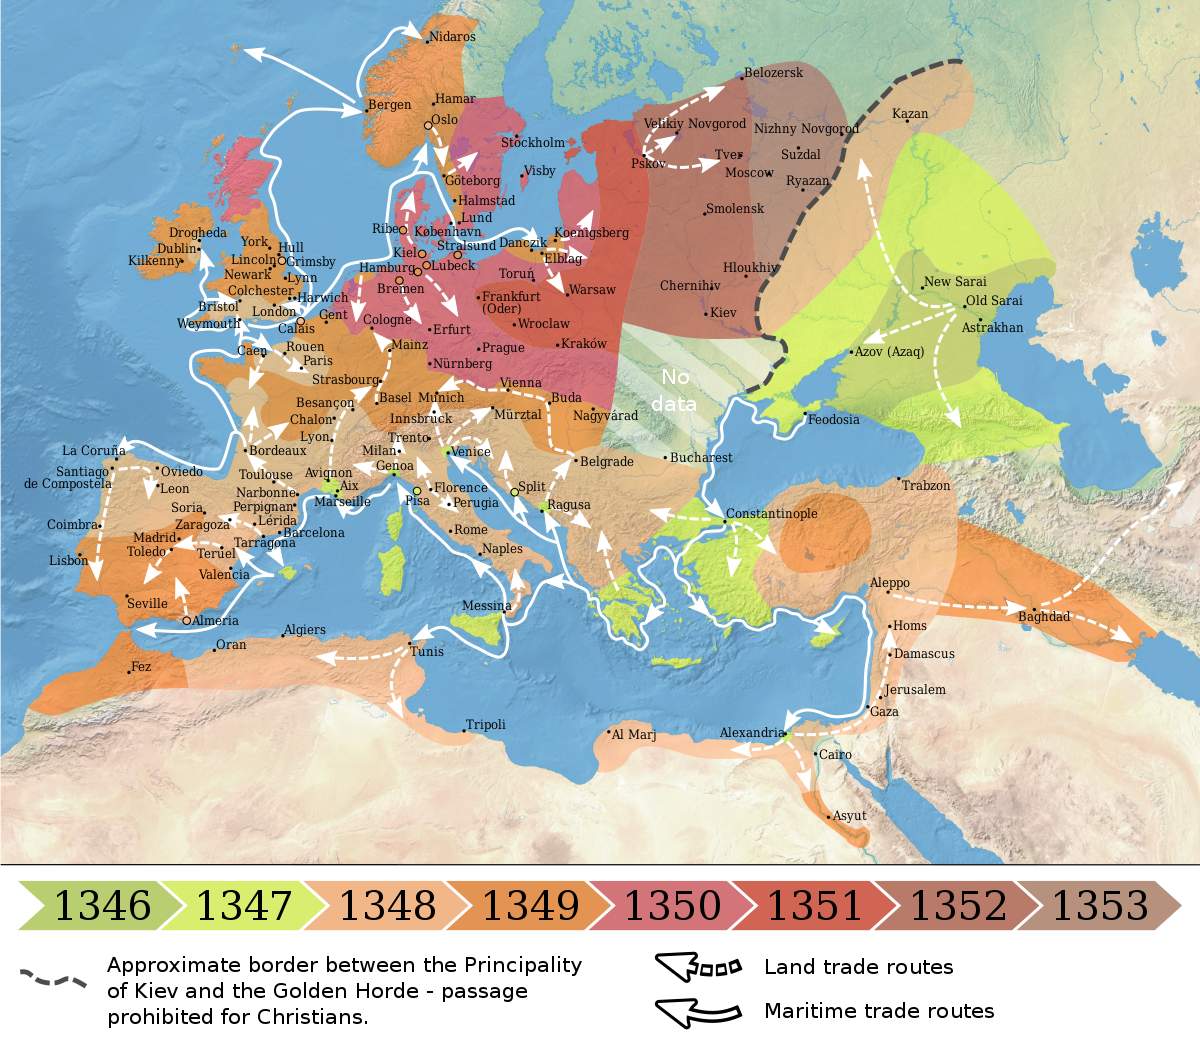  https://en.wikipedia.org/wiki/Black_Death#/media/File:1346-1353_spread_of_the_Black_Death_in_Europe_map.svg 